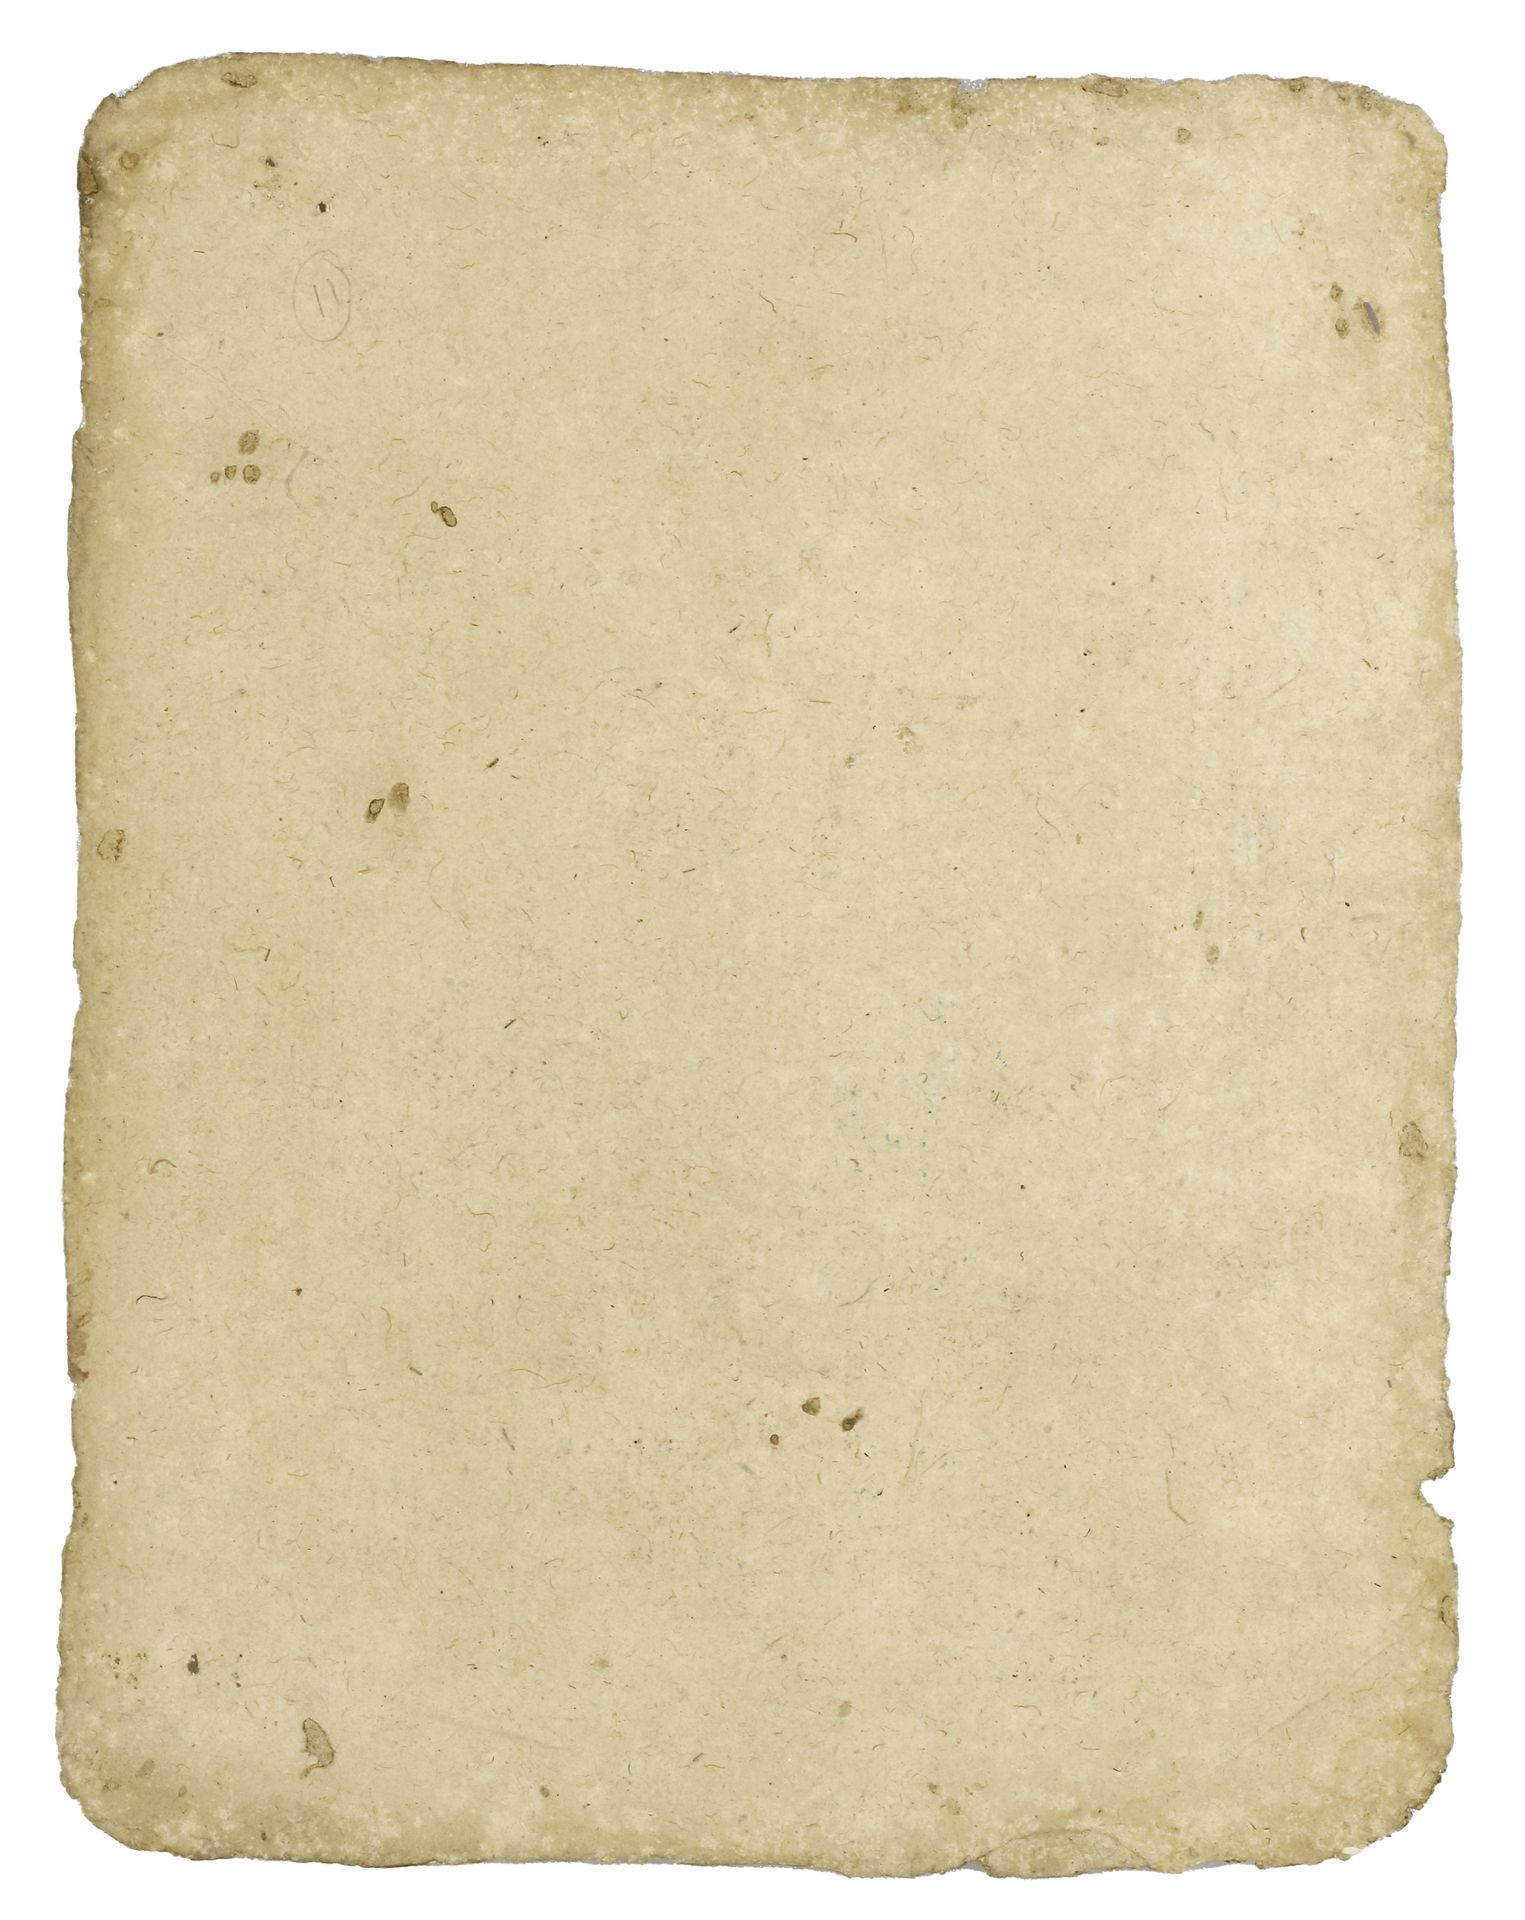 SULTAN 'ALI 'ADIL SHAH OF BIJAPUR (R. 1557-79), INDIA, DECCAN, BIJAPUR, CIRCA 18TH OR 19TH CENTURY - Image 4 of 4